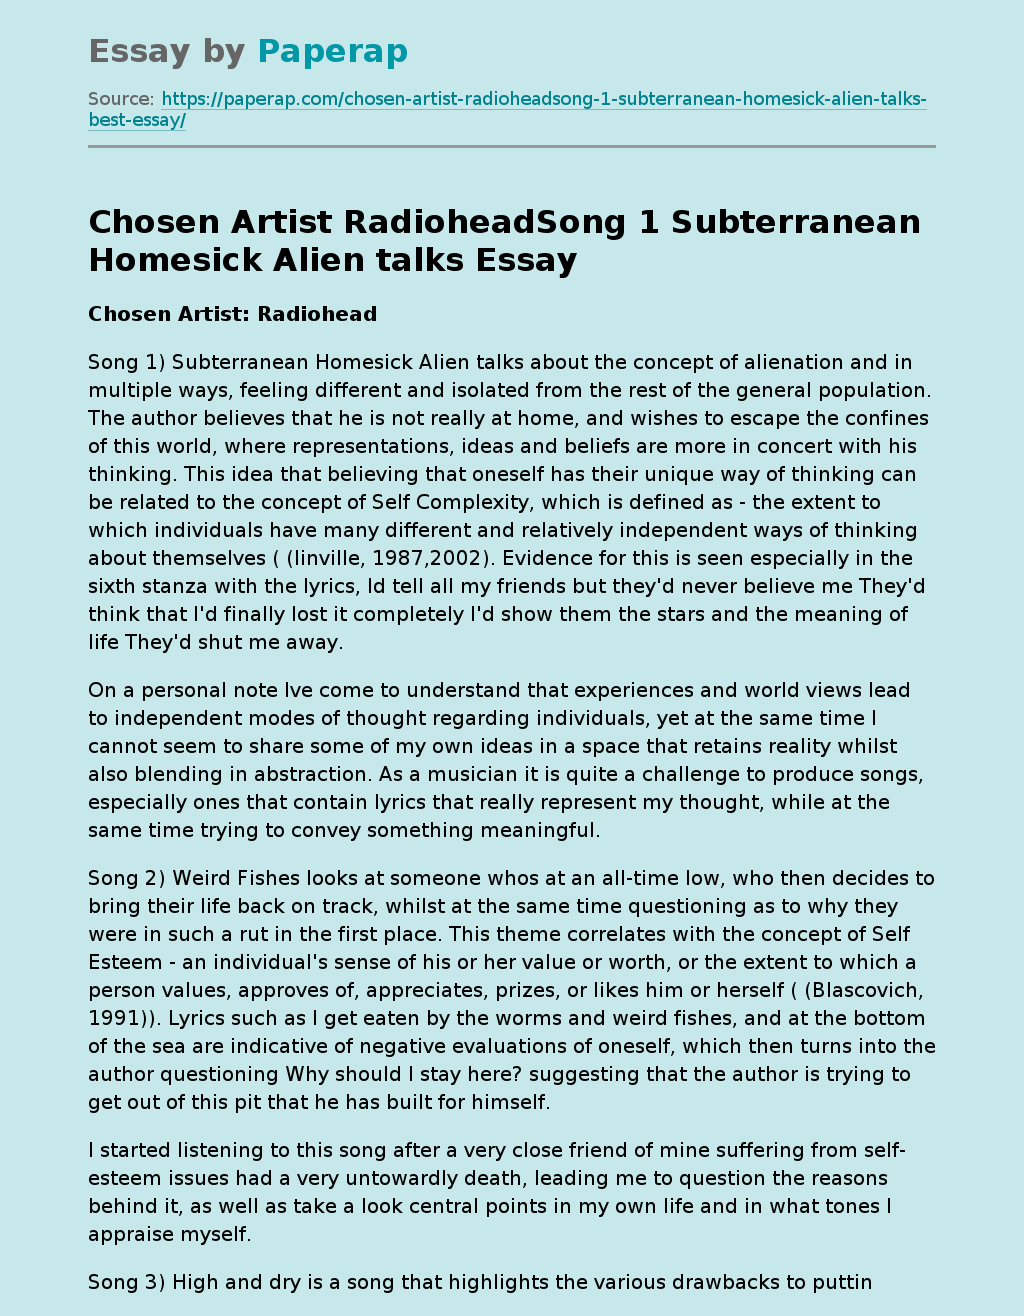 Chosen Artist RadioheadSong 1 Subterranean Homesick Alien talks